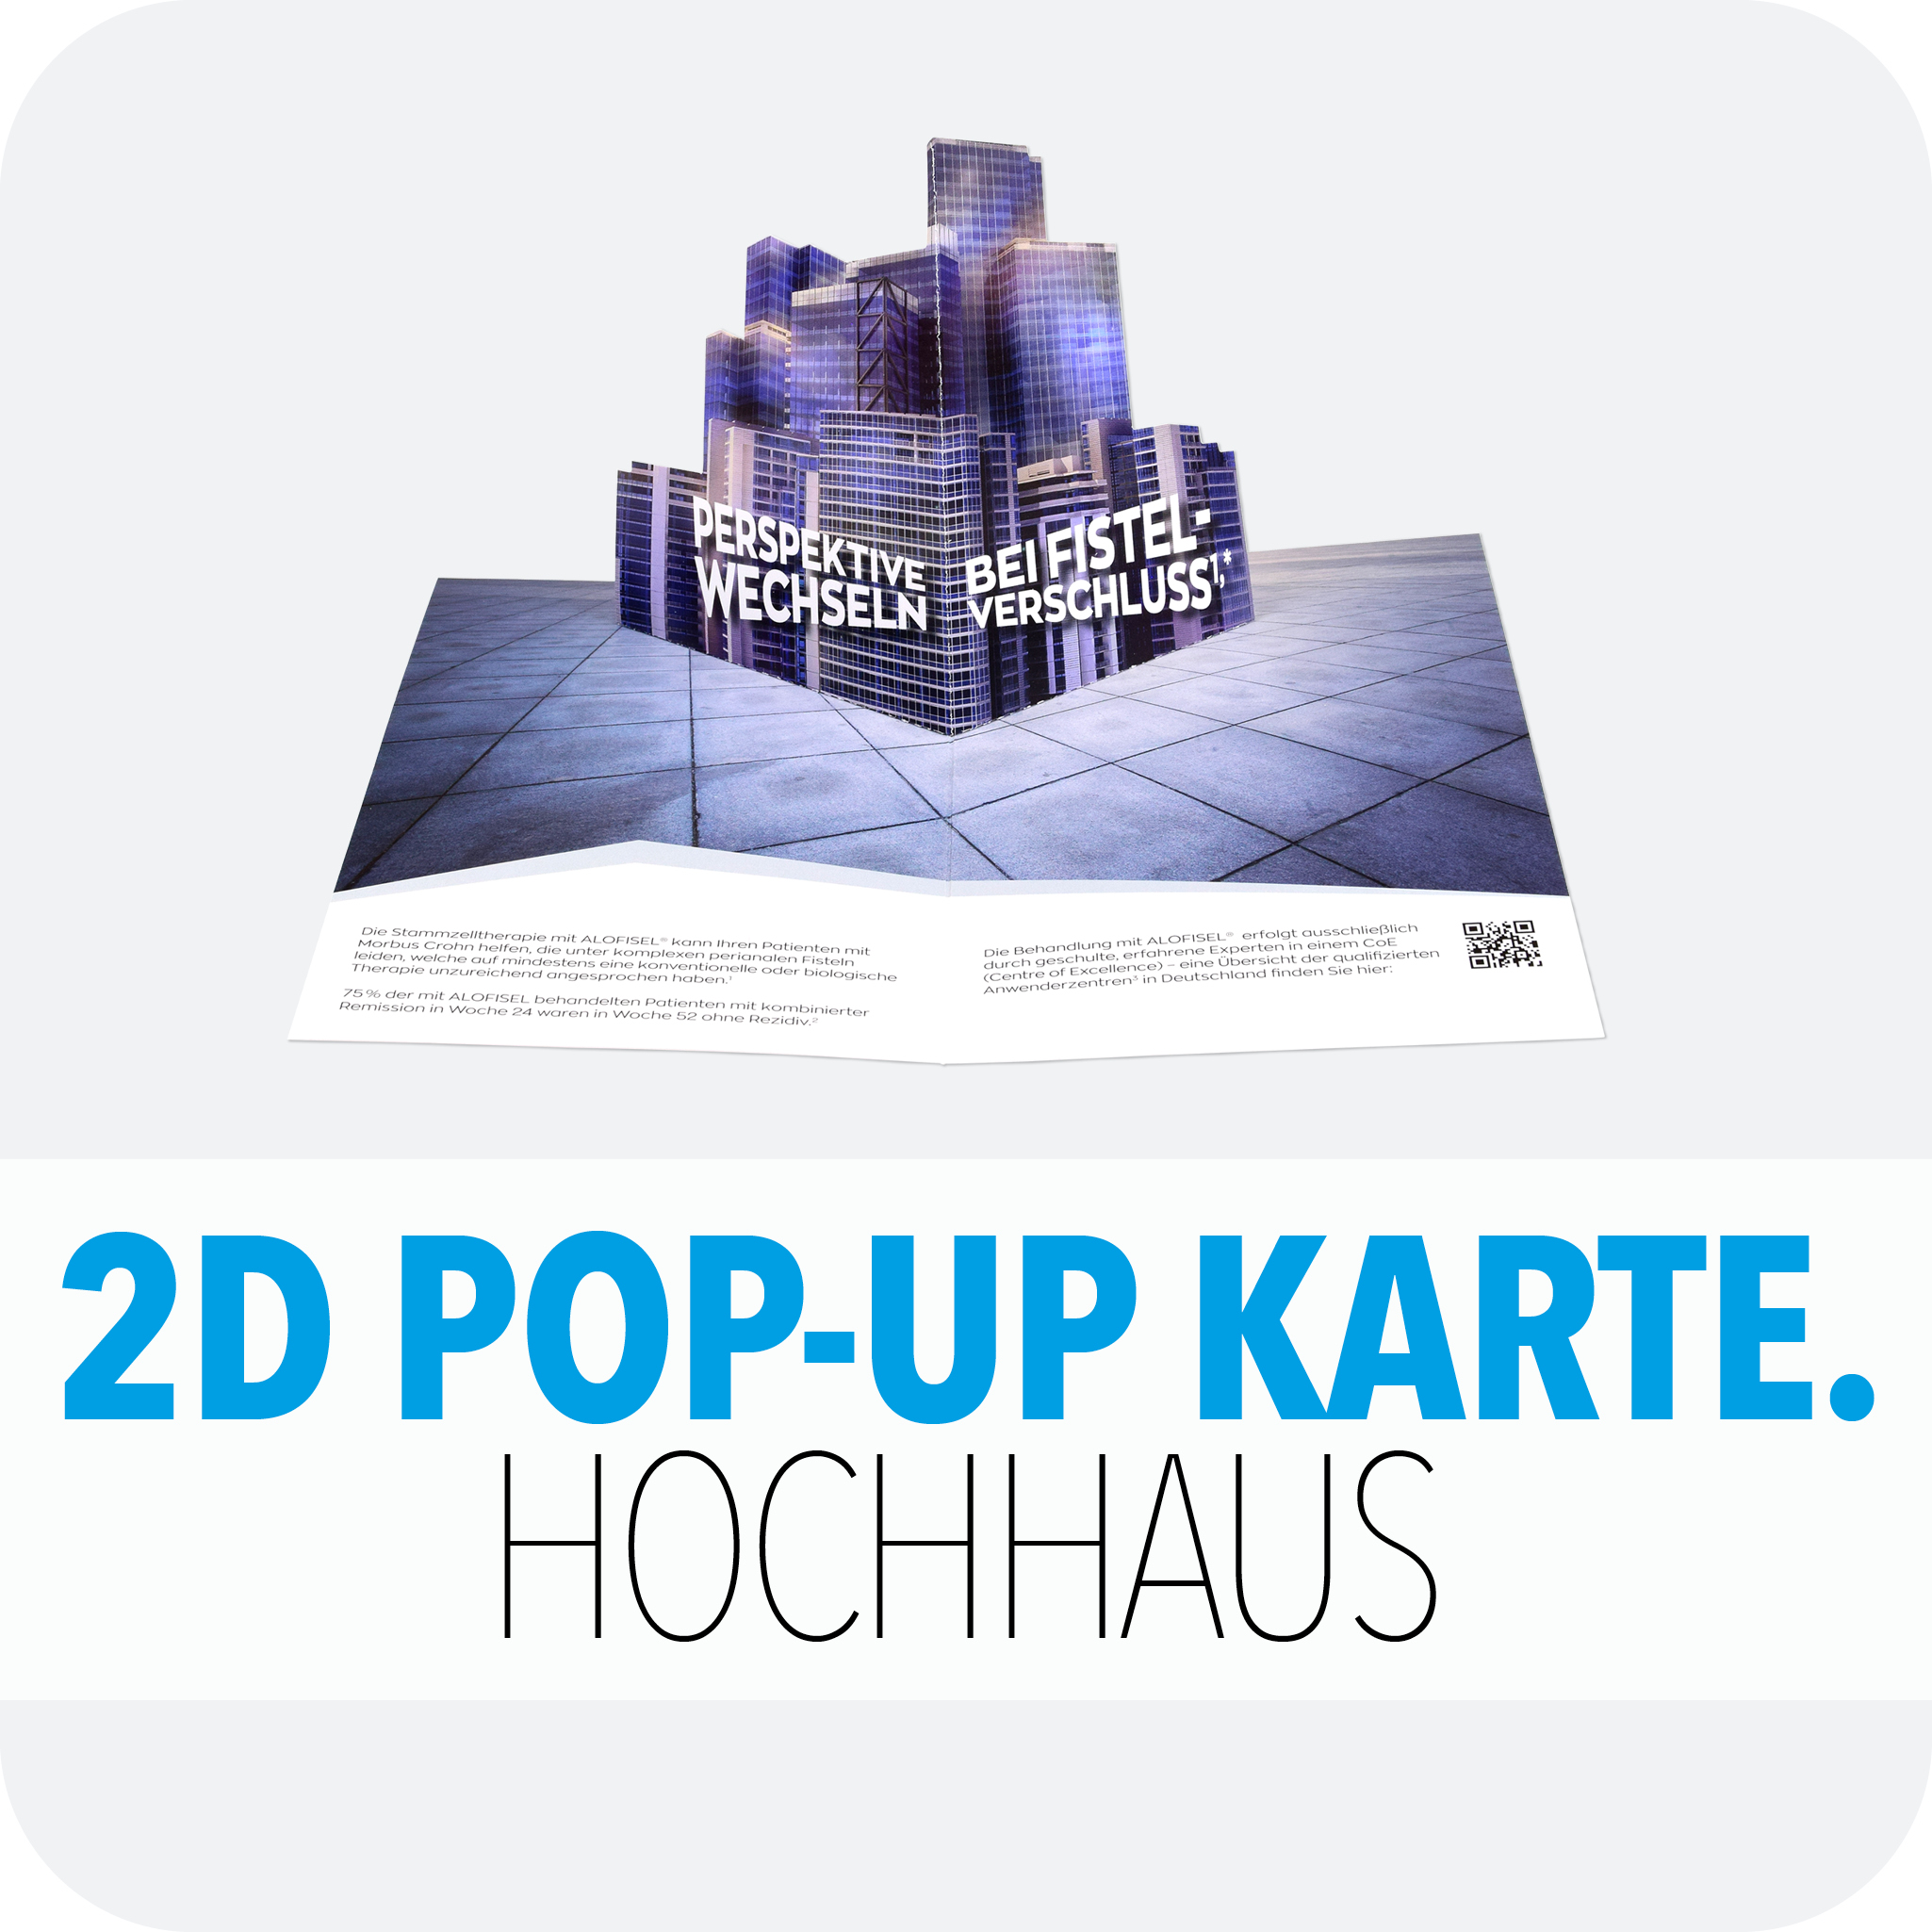 2D Pop-Up Karte Hochhaus